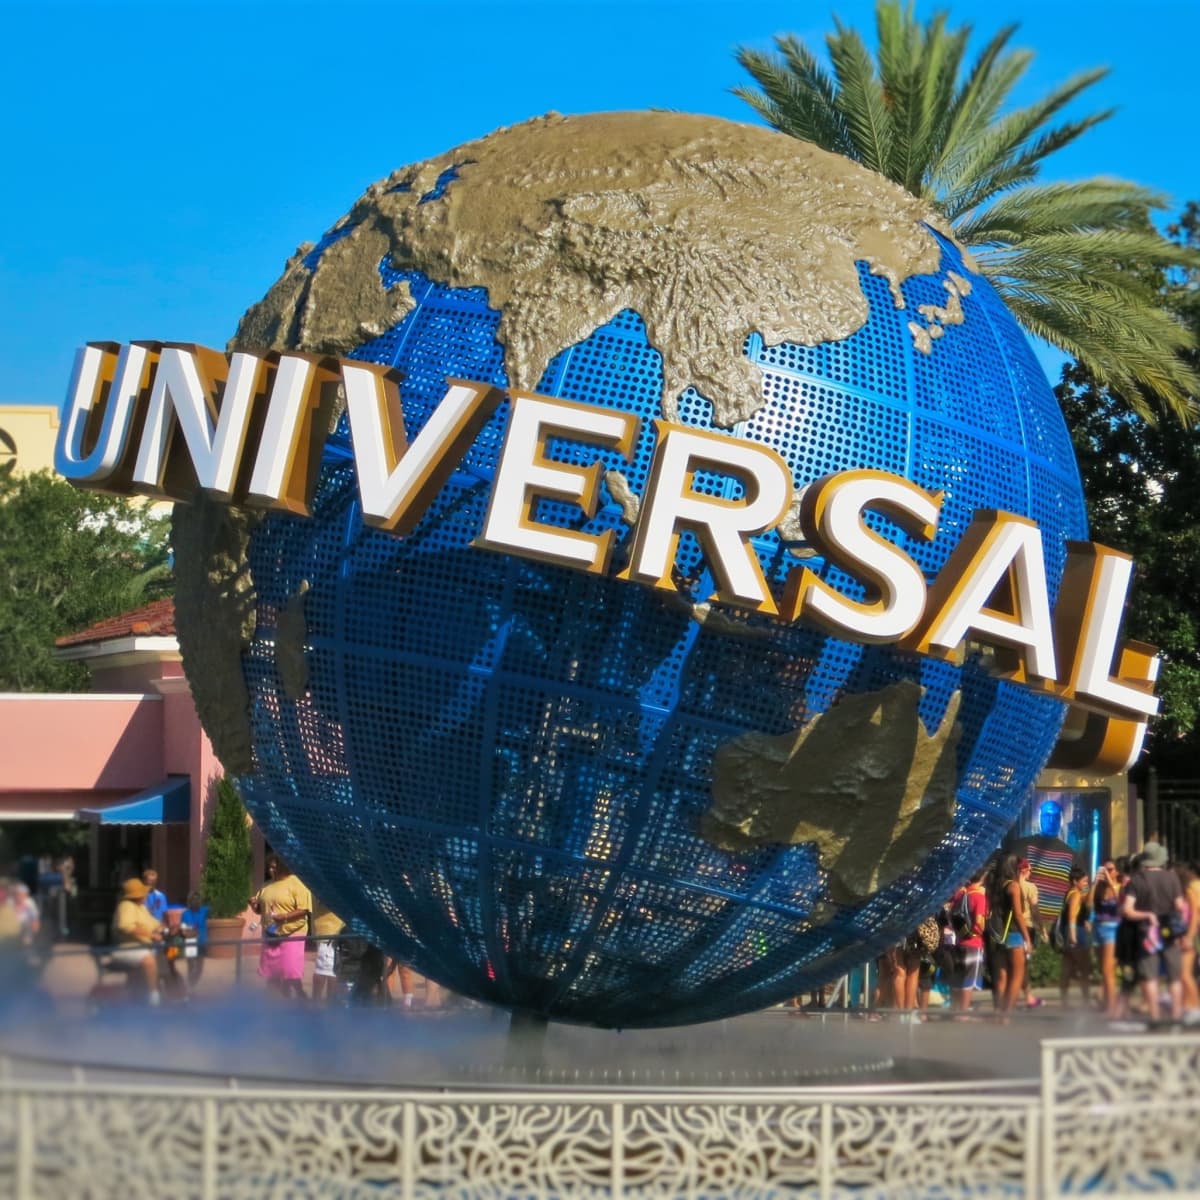 Things to Do in Orlando - Universal CityWalk Orlando